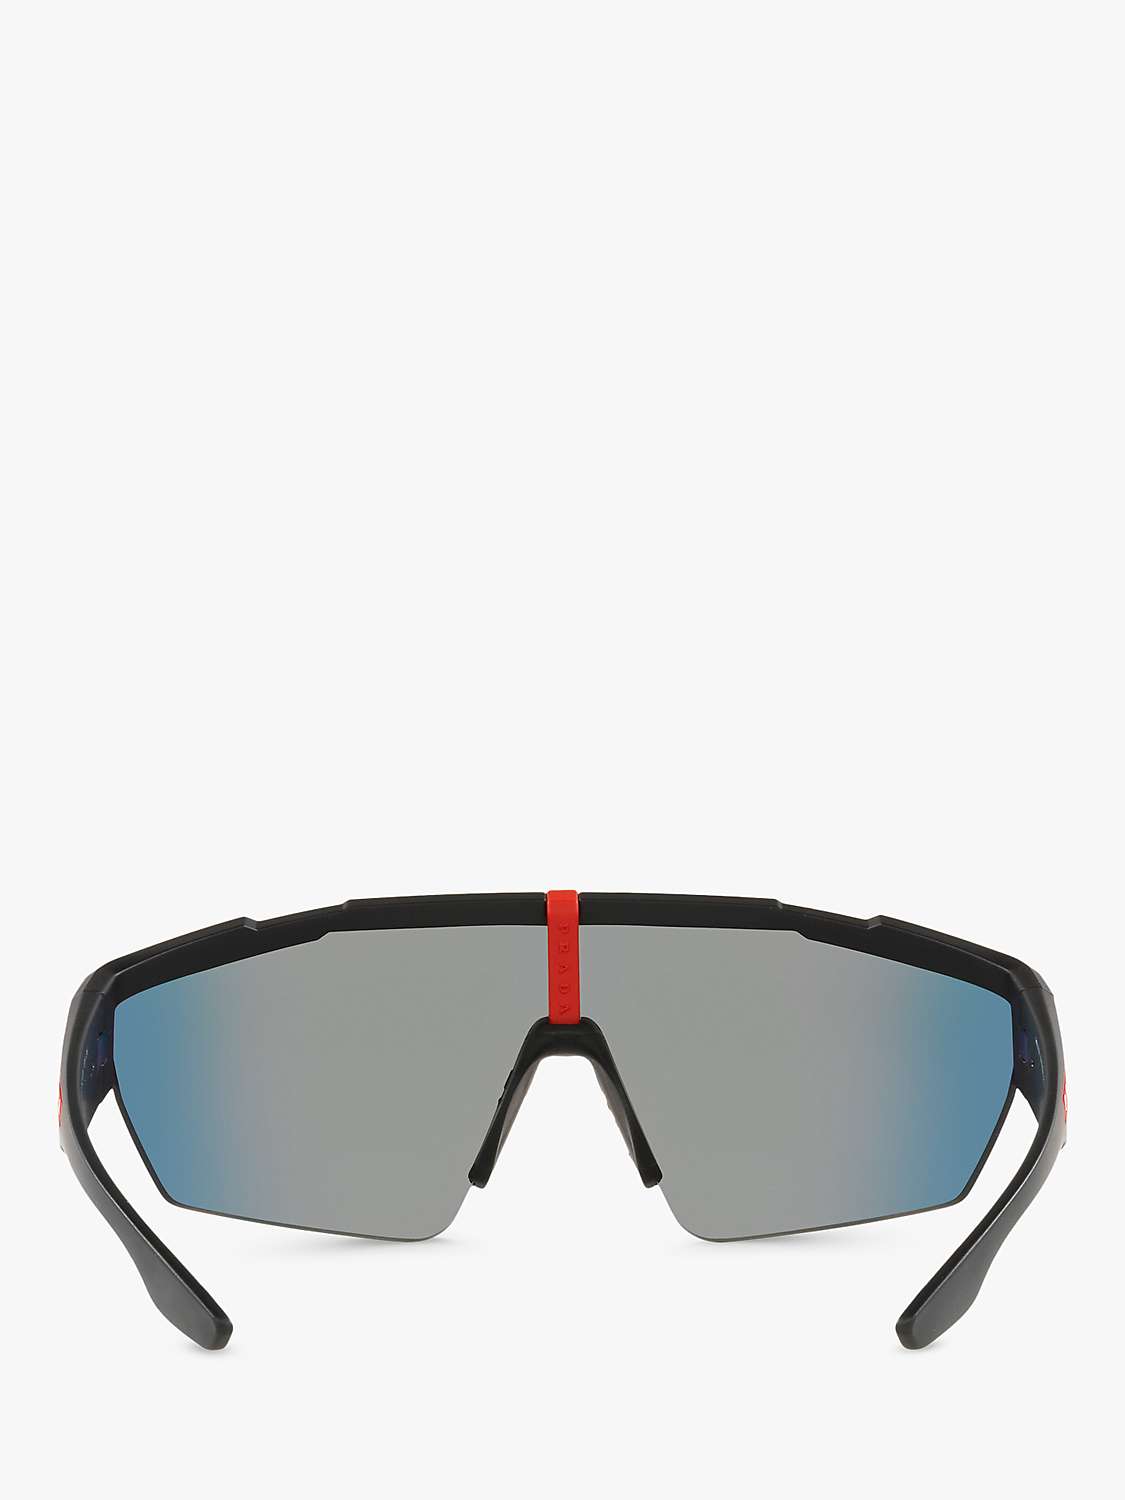 Buy Prada Linea Rossa PS 03XS Men's Wrap Sunglasses, Black Rubber/Blue Online at johnlewis.com